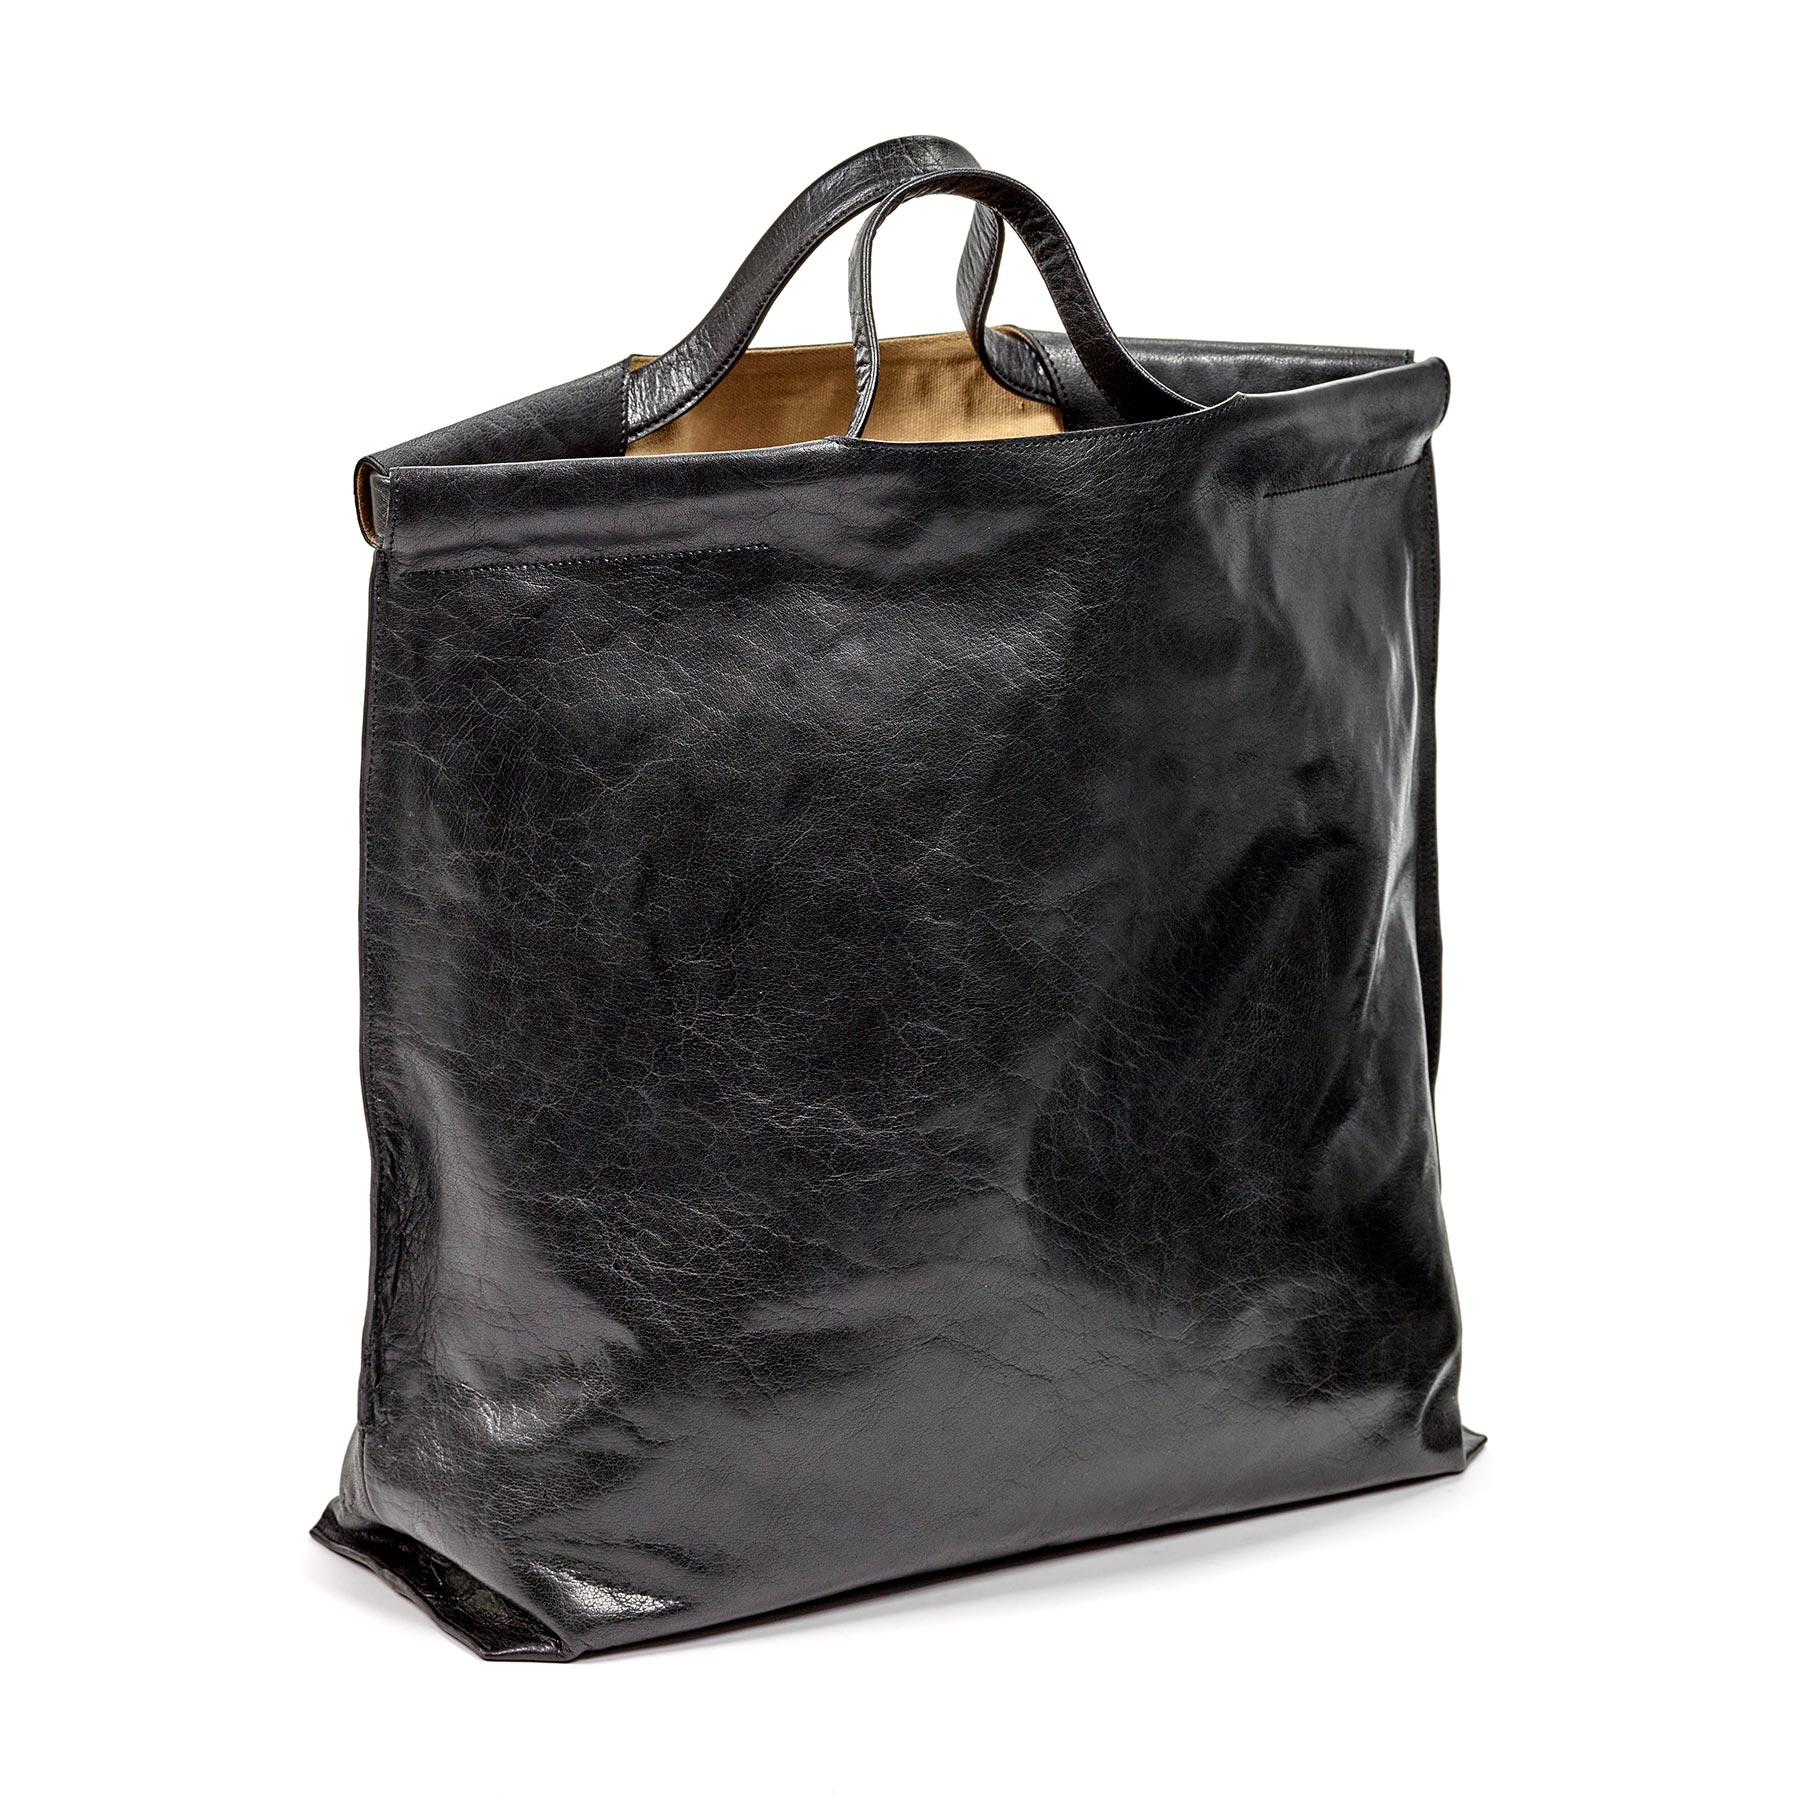 Bea Mombaers Black Leather Shopping Bag